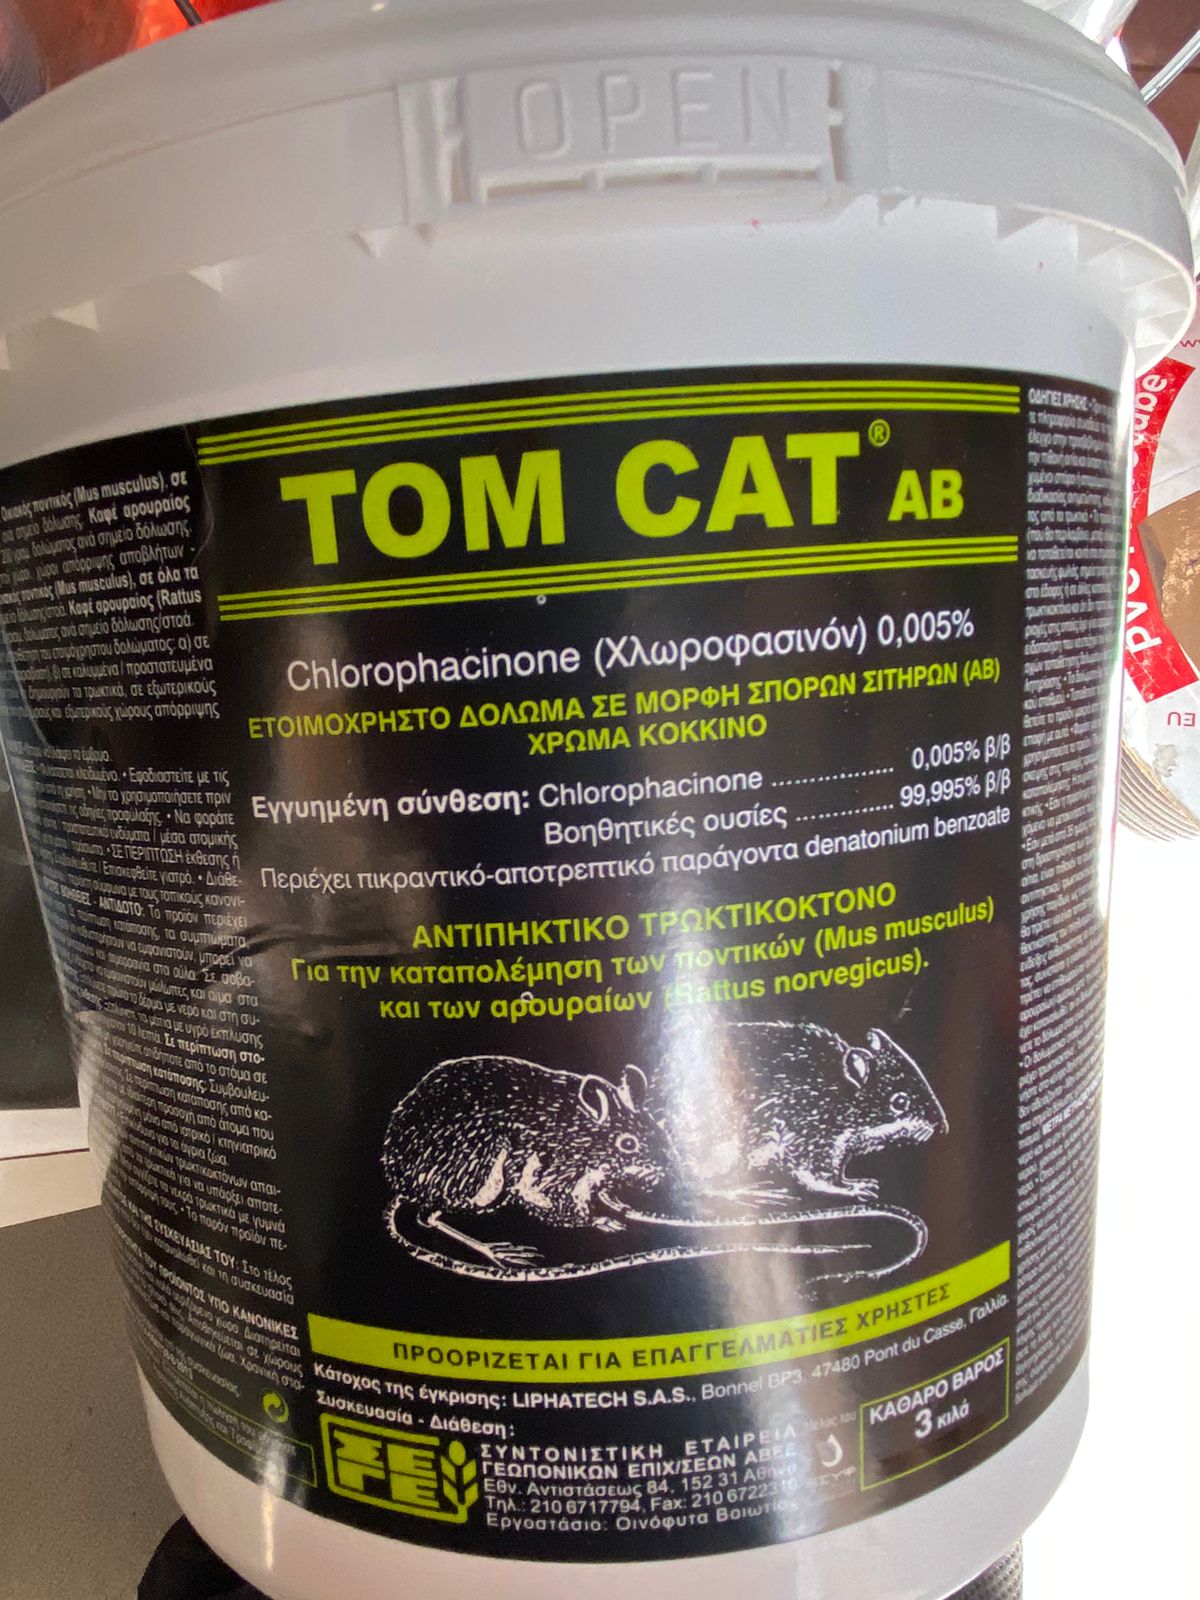 Tom cat ποντικοφαρμακο σε σιταρι 3kg